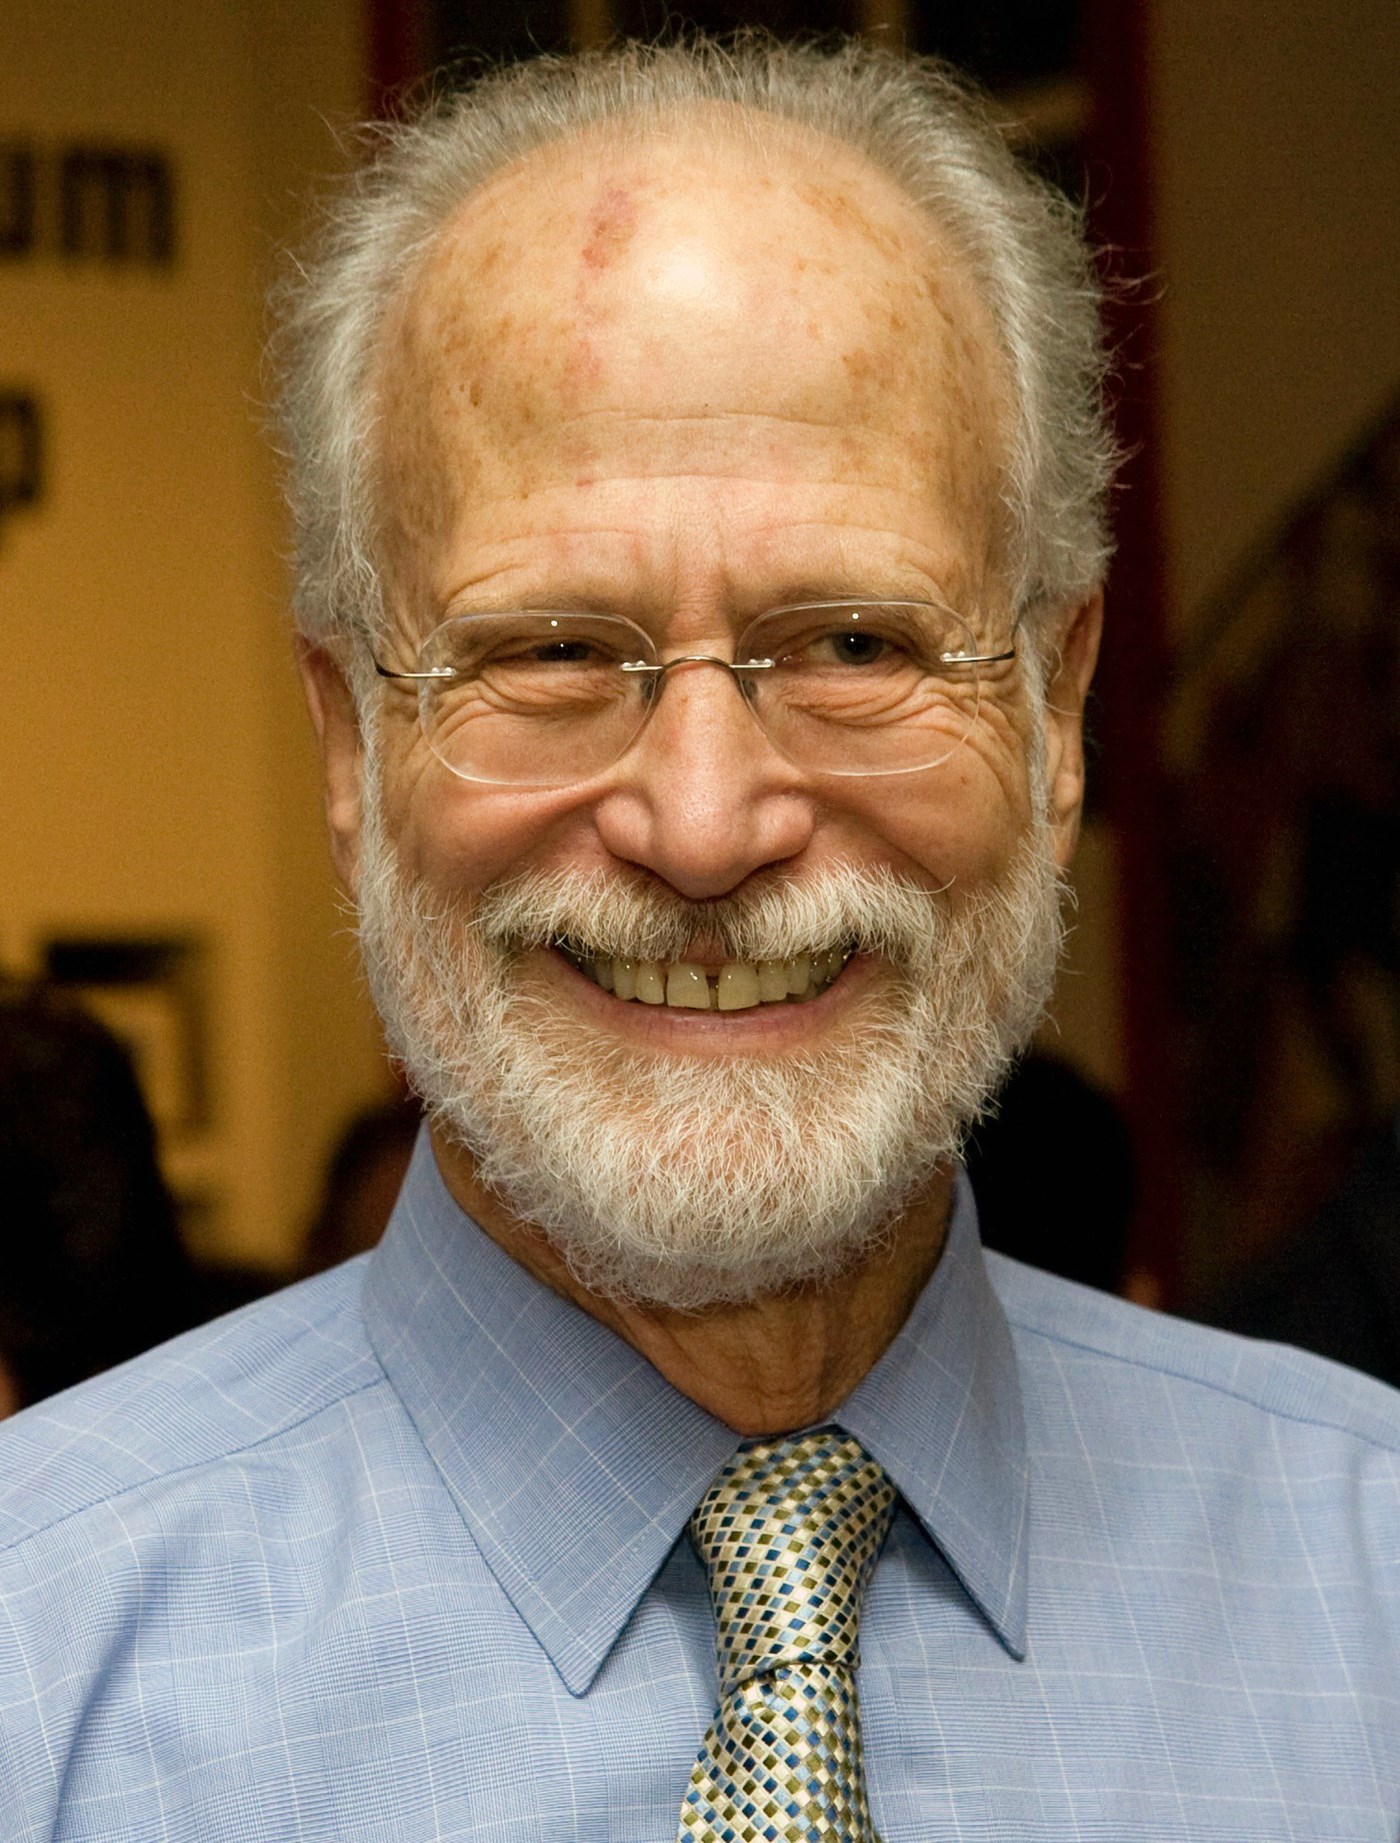 David H. Wegman, M.D., M.P.H. is an Emeritus Professor in the Public Health Department at UMass Lowell.